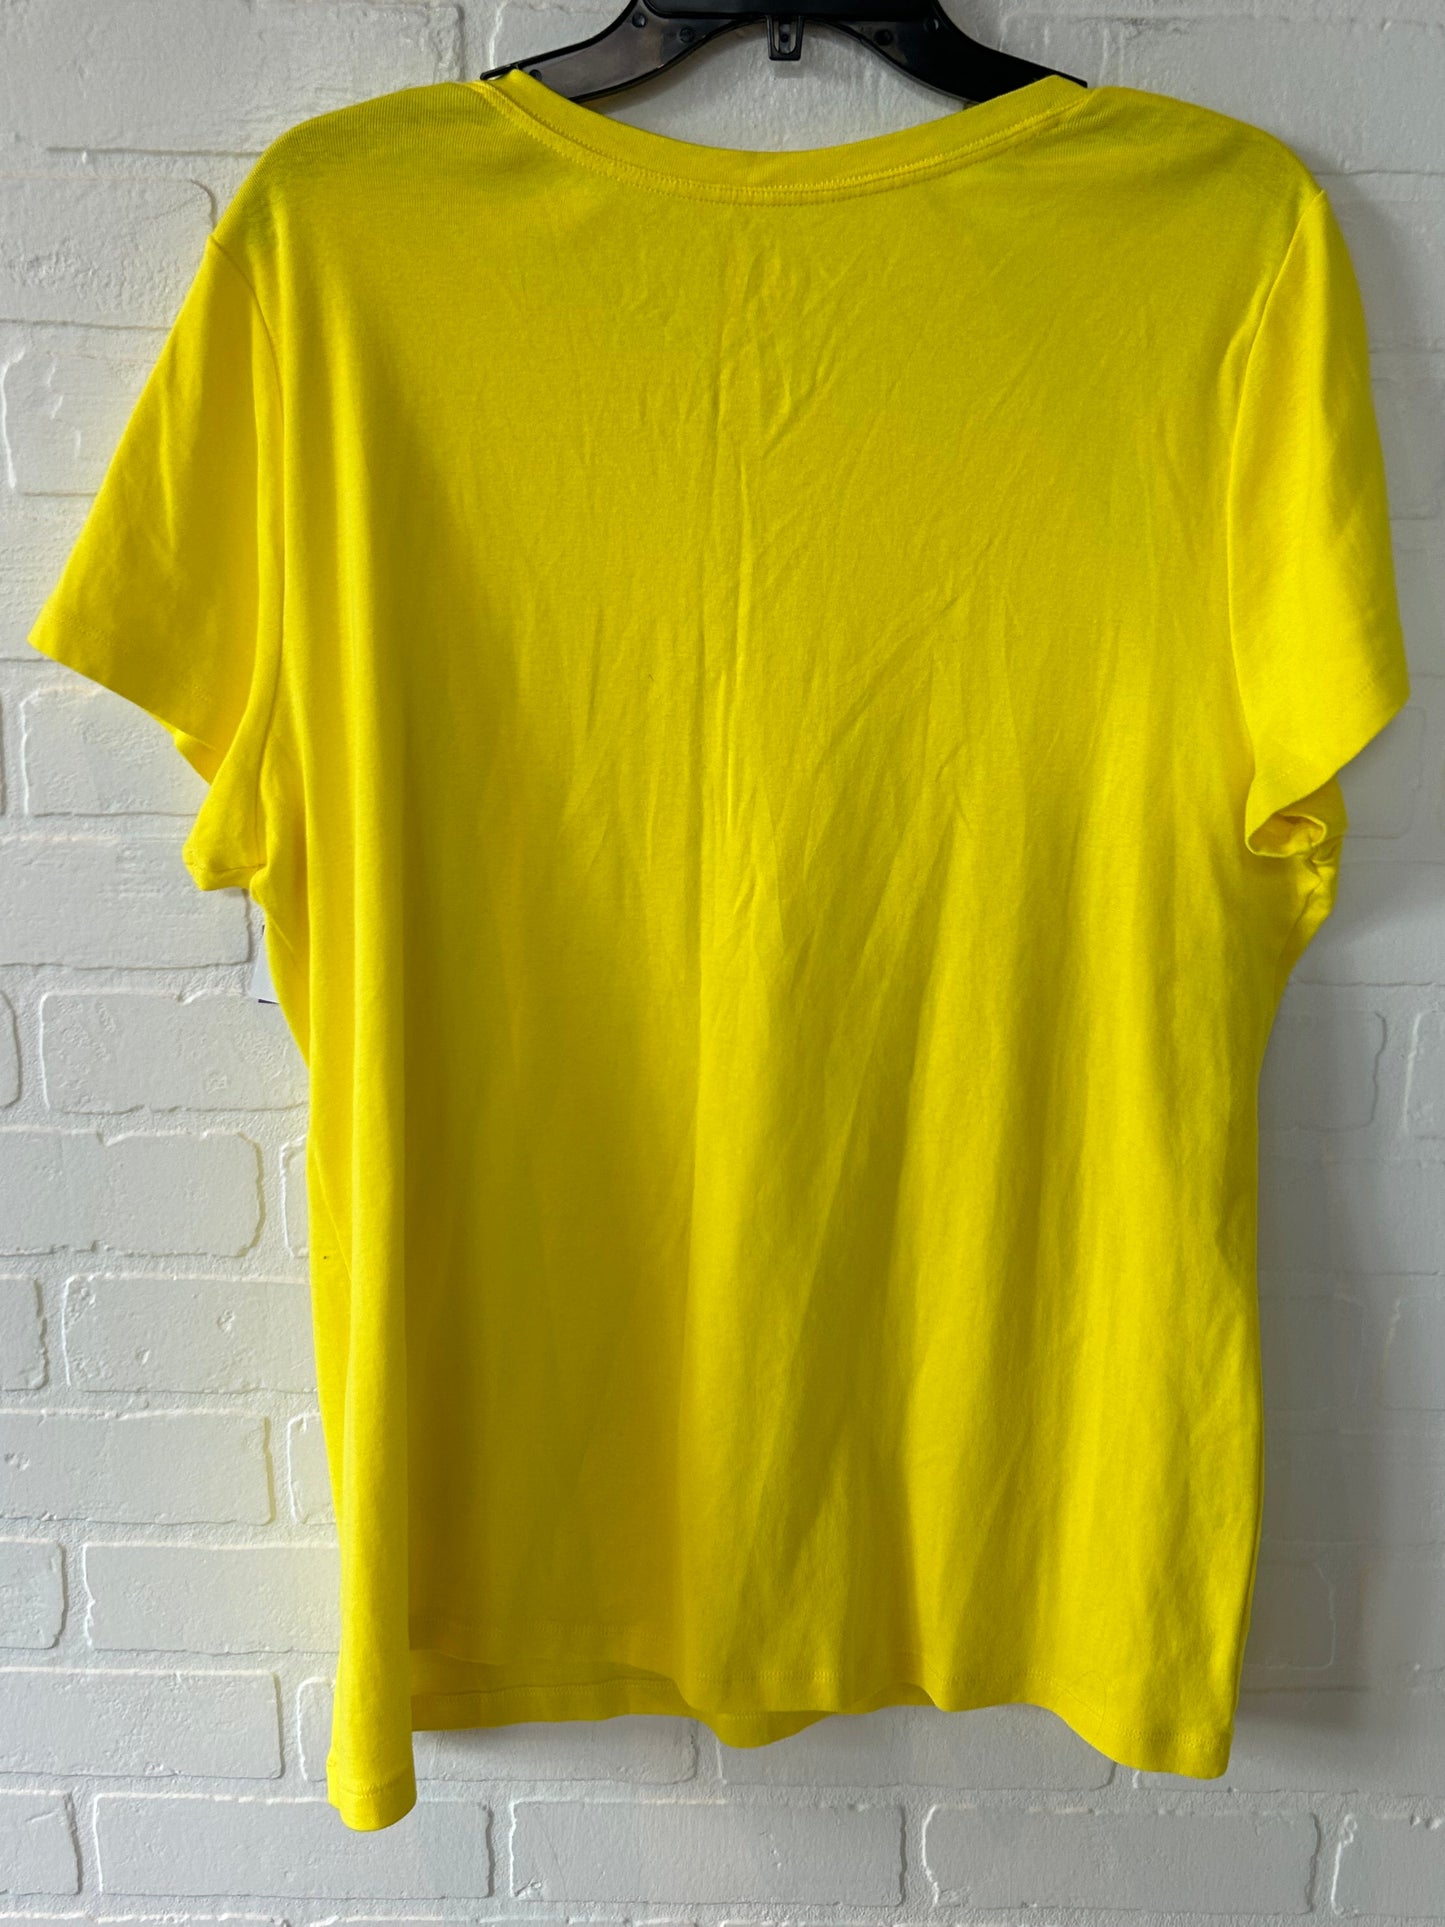 Yellow Top Short Sleeve Basic St Johns Bay, Size 2x